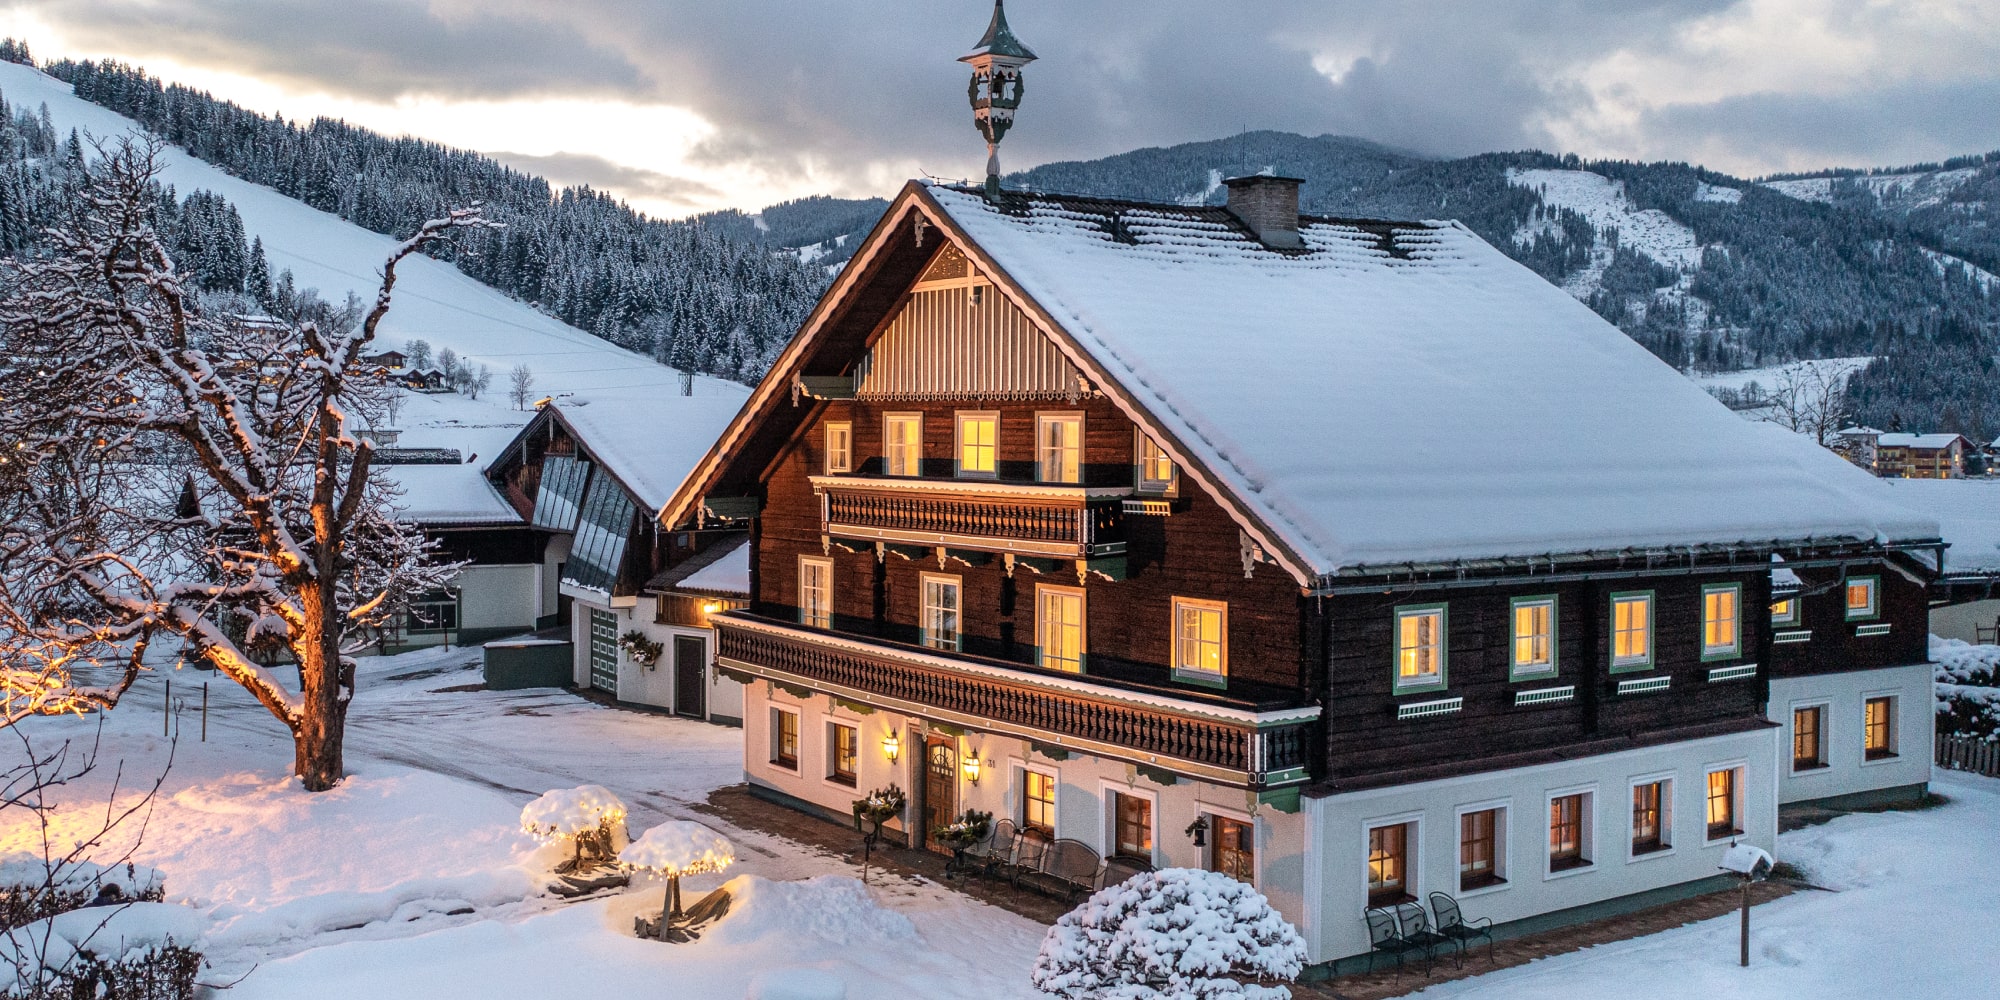 Winterurlaub in der Pension Klinglhub in Flachau